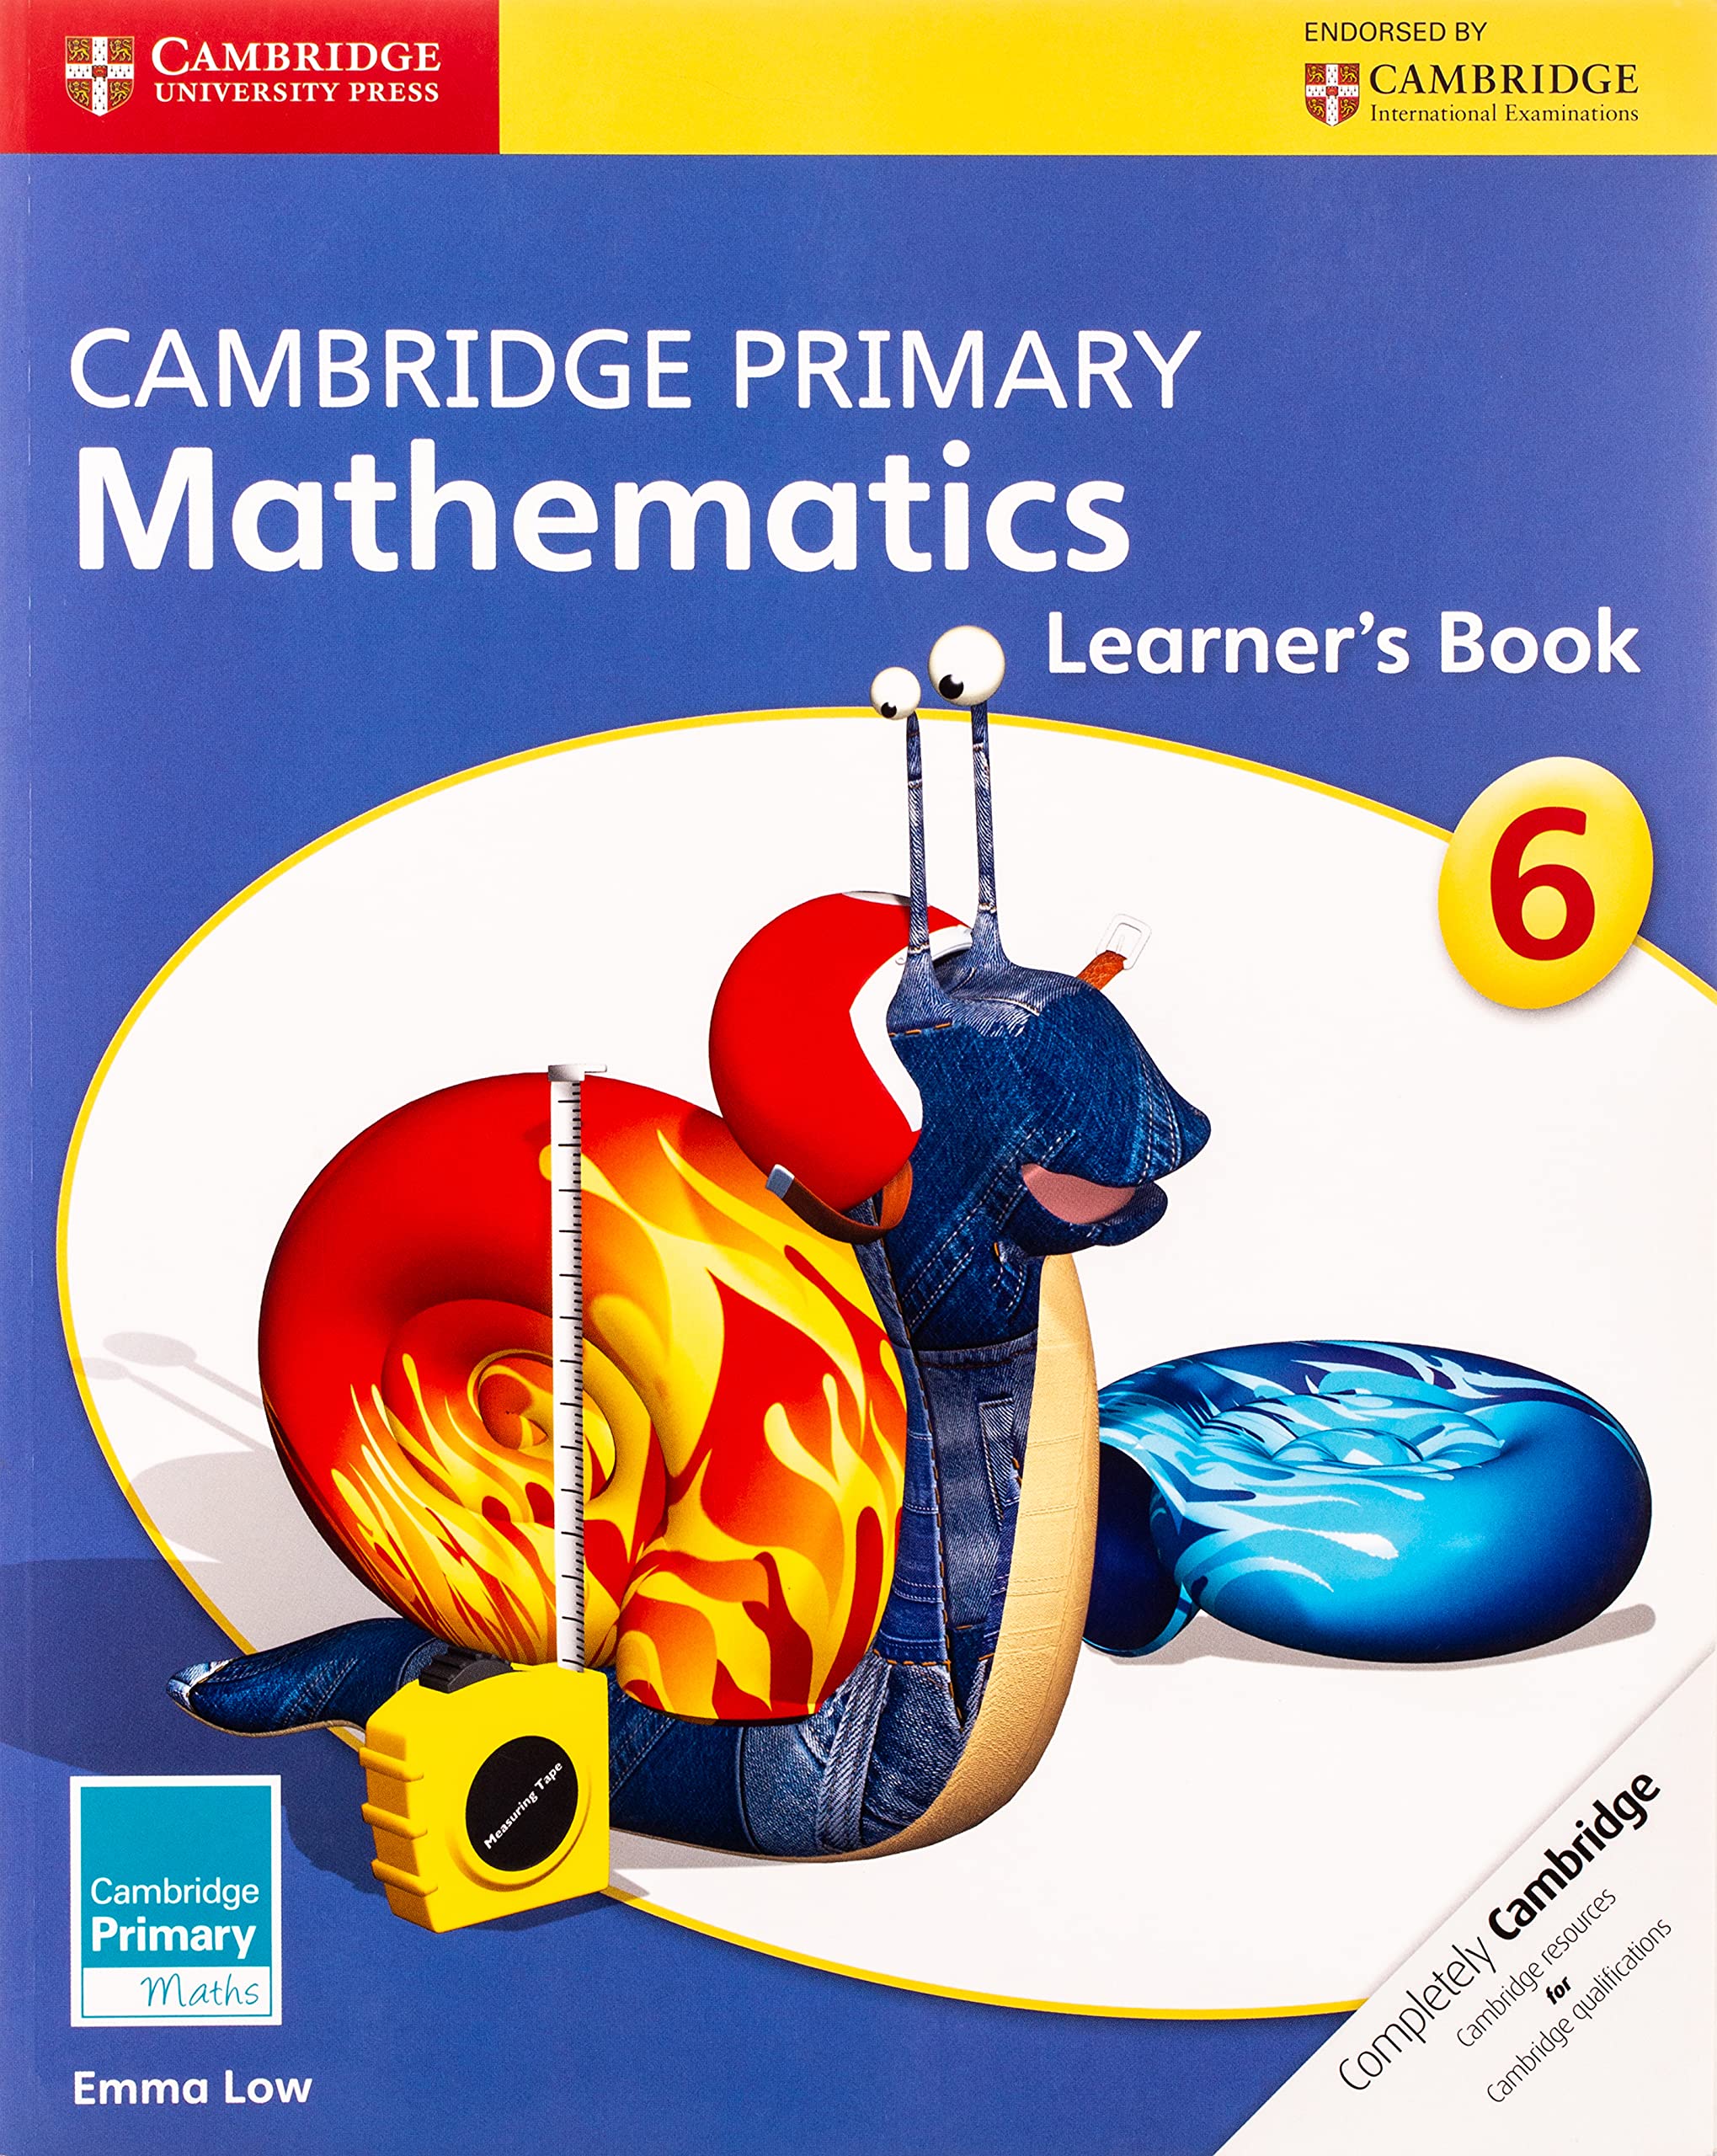 Cambridge mathematics. Cambridge Primary Mathematics Learner's book 6. Cambridge Math books. Cambridge Primary Learners. Cambridge Primary Mathematics Learners book 1.